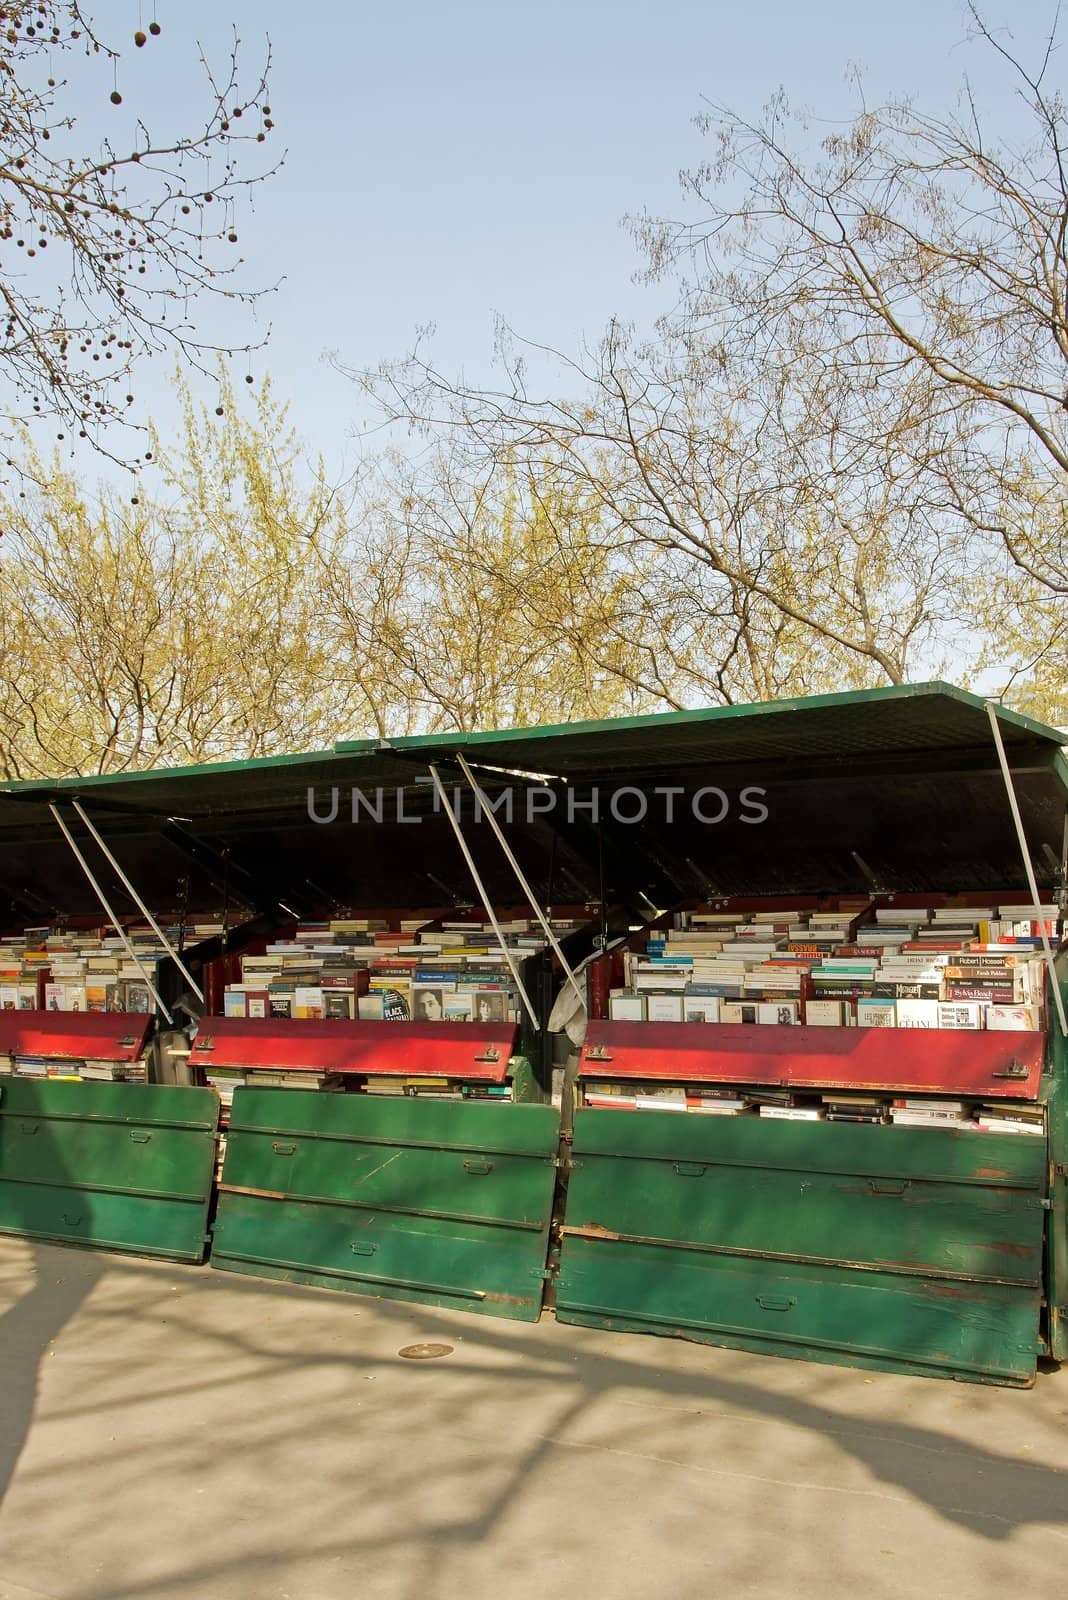 booksellers in Paris, Quai de Seine by neko92vl